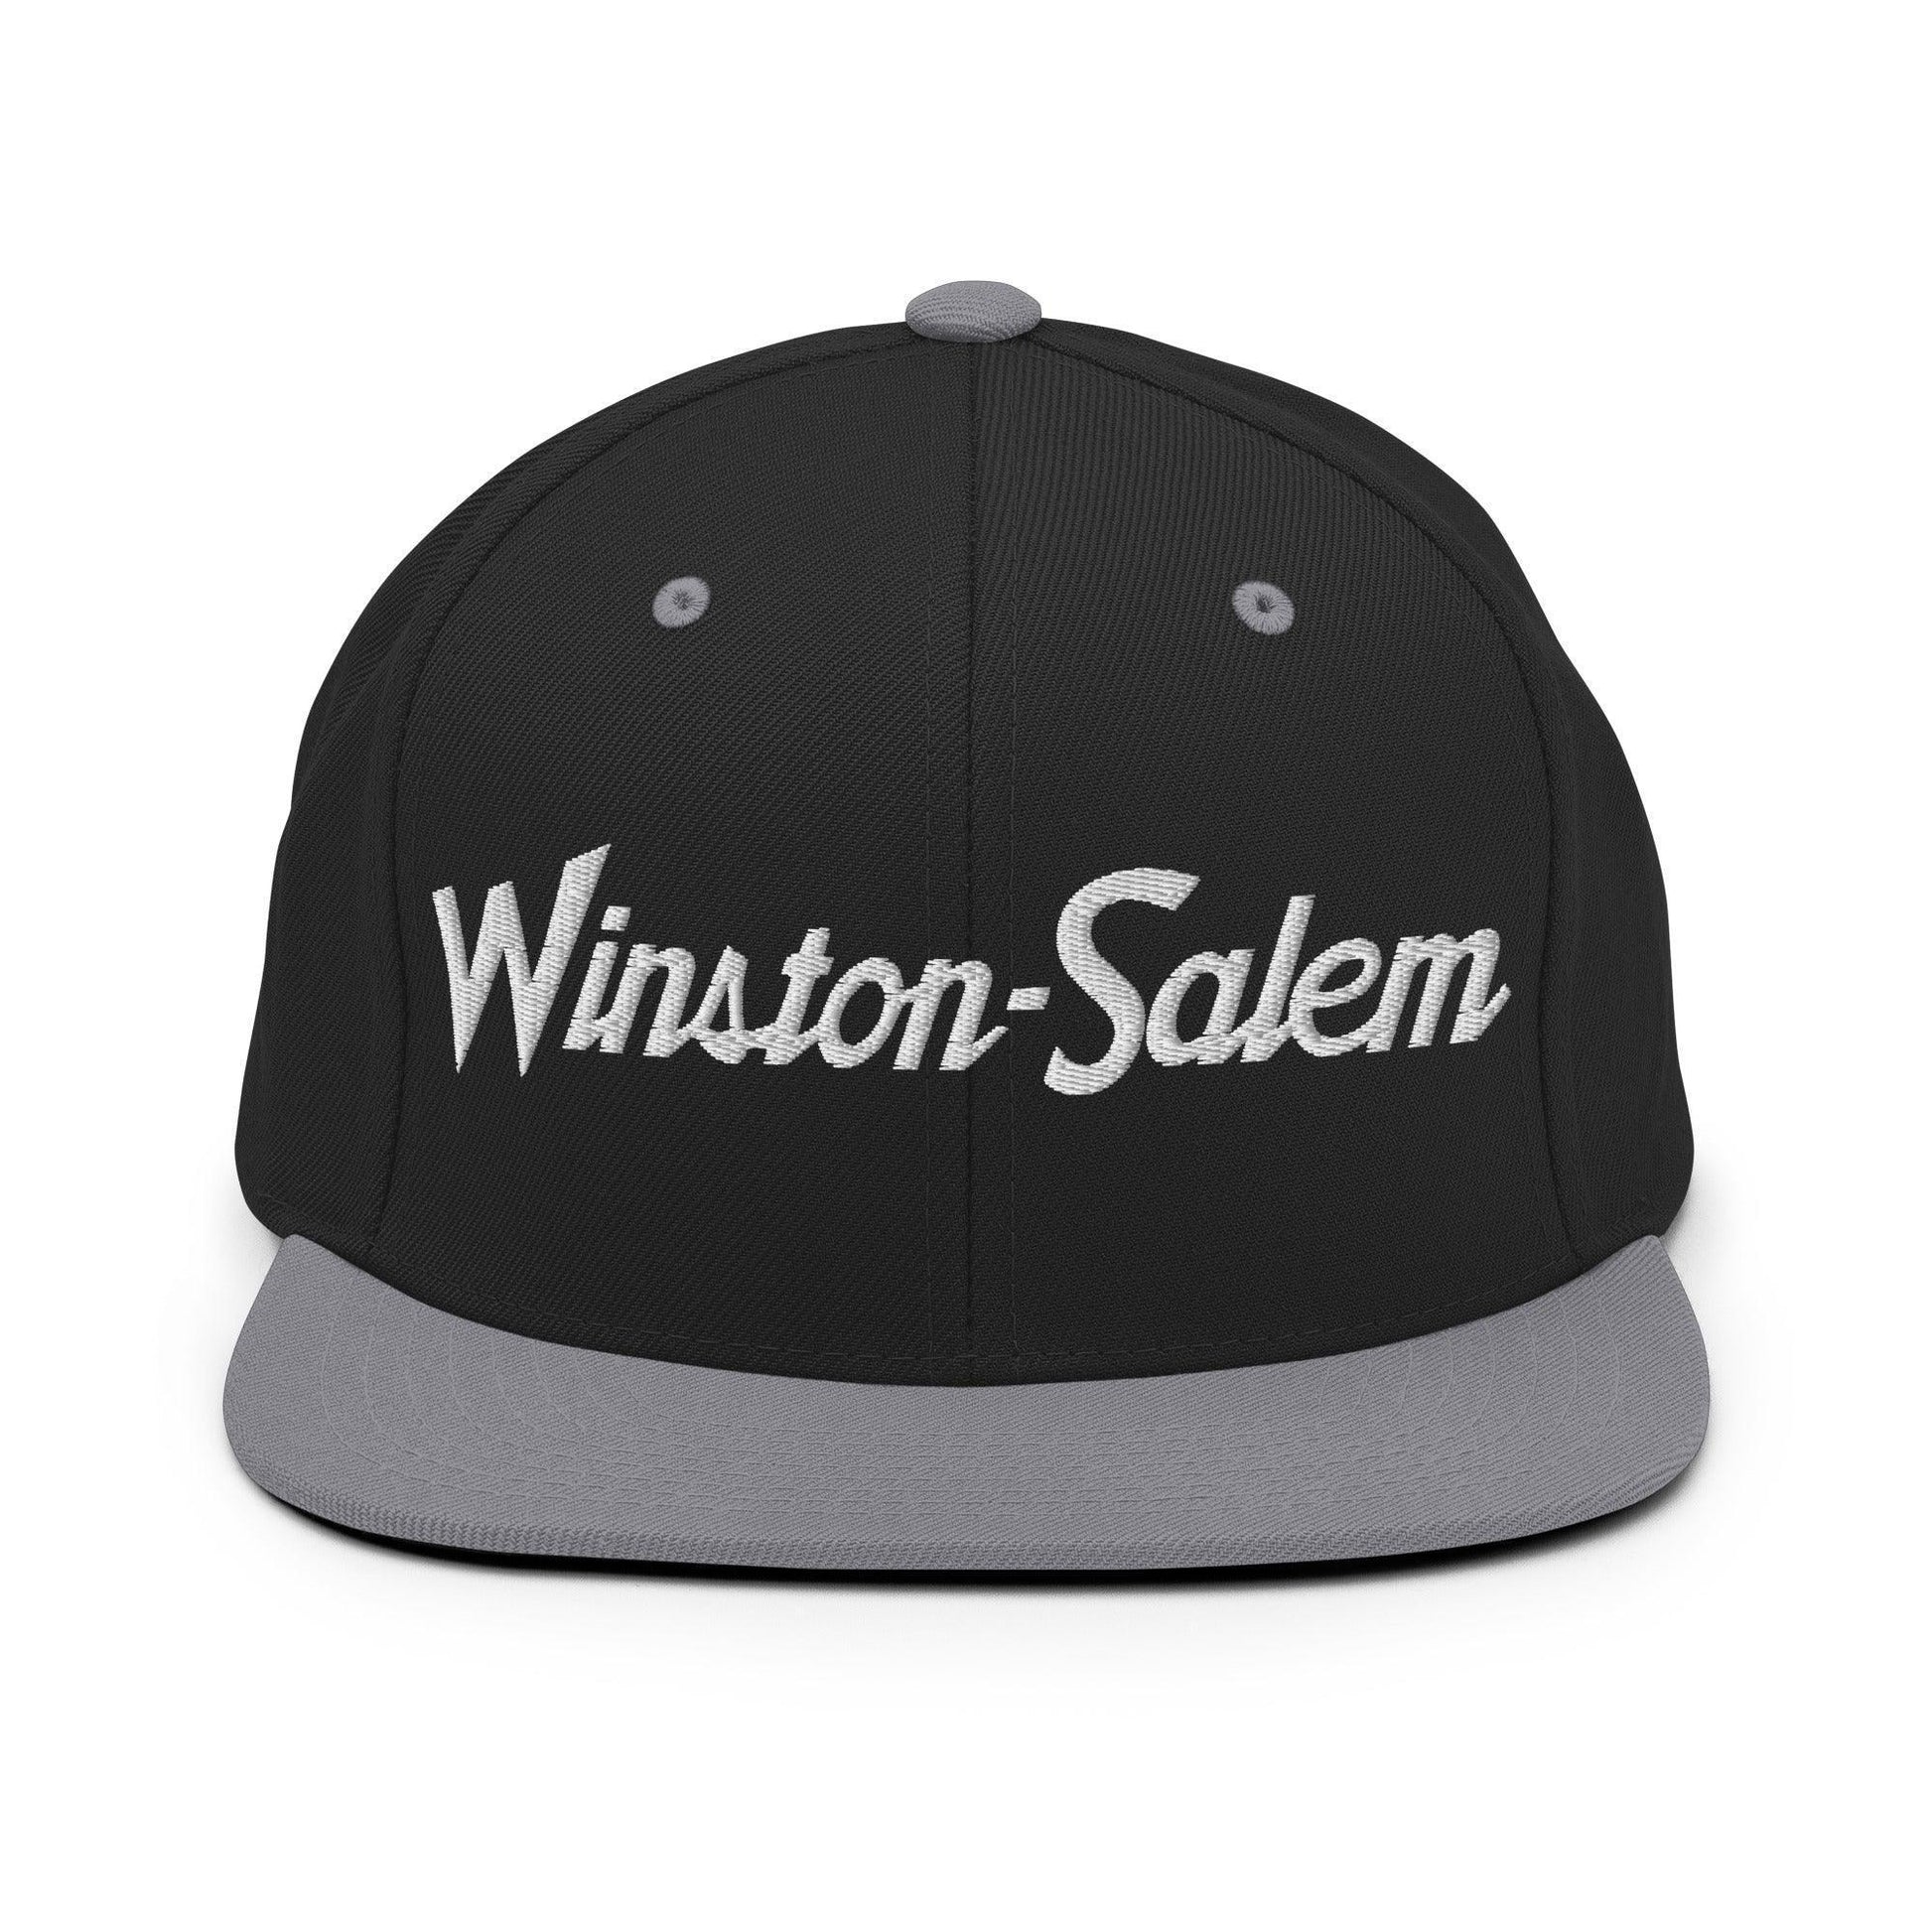 Winston-Salem Script Snapback Hat Black/ Silver